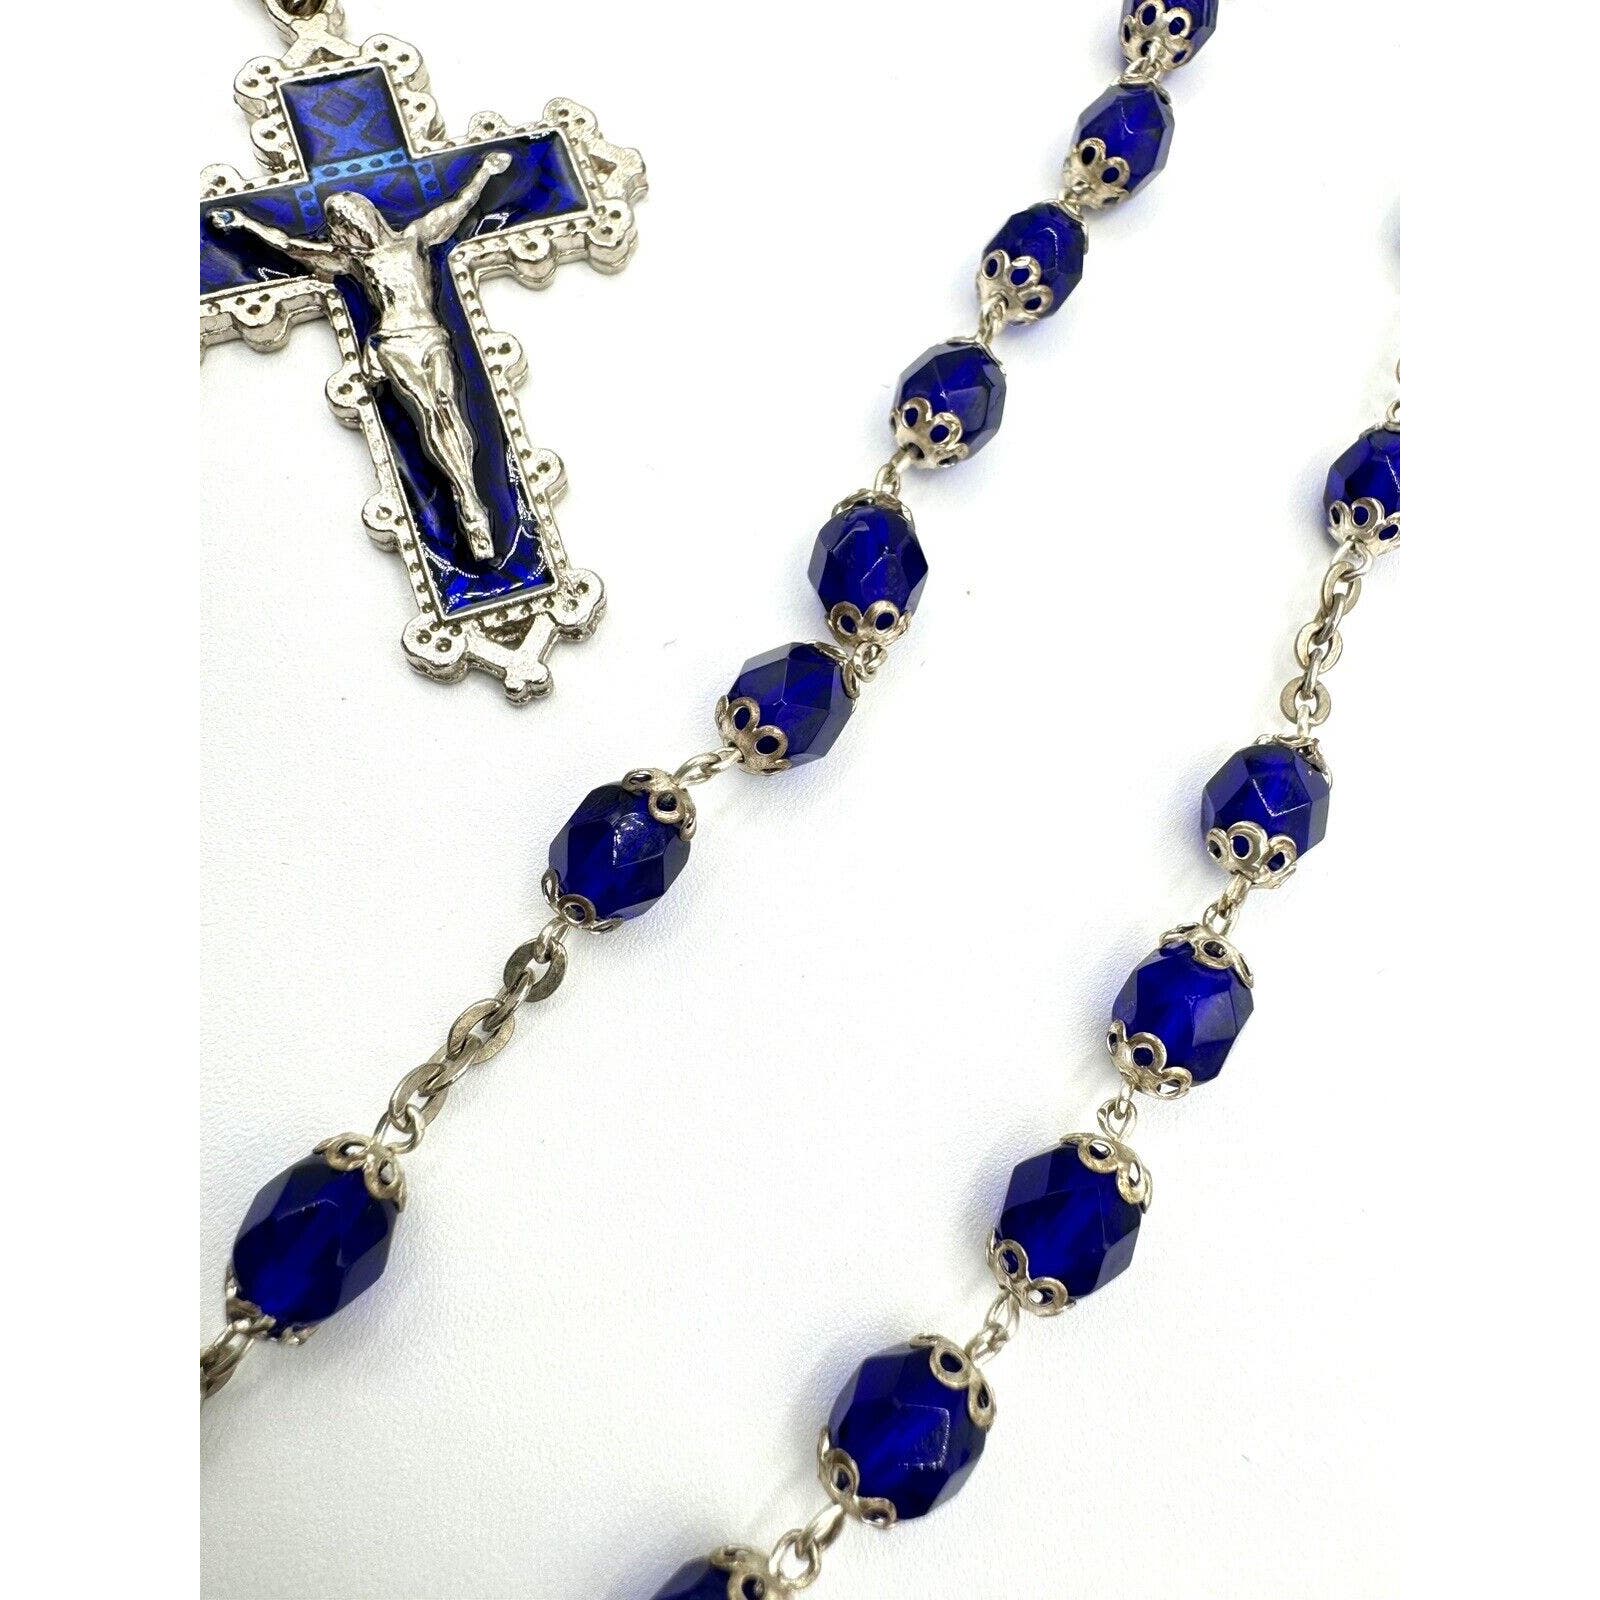 Black Dog VintageVintage Colbalt Blue Gripoix And Crystal Our Lady Of Lourdes Catholic Rosary - Black Dog Vintage